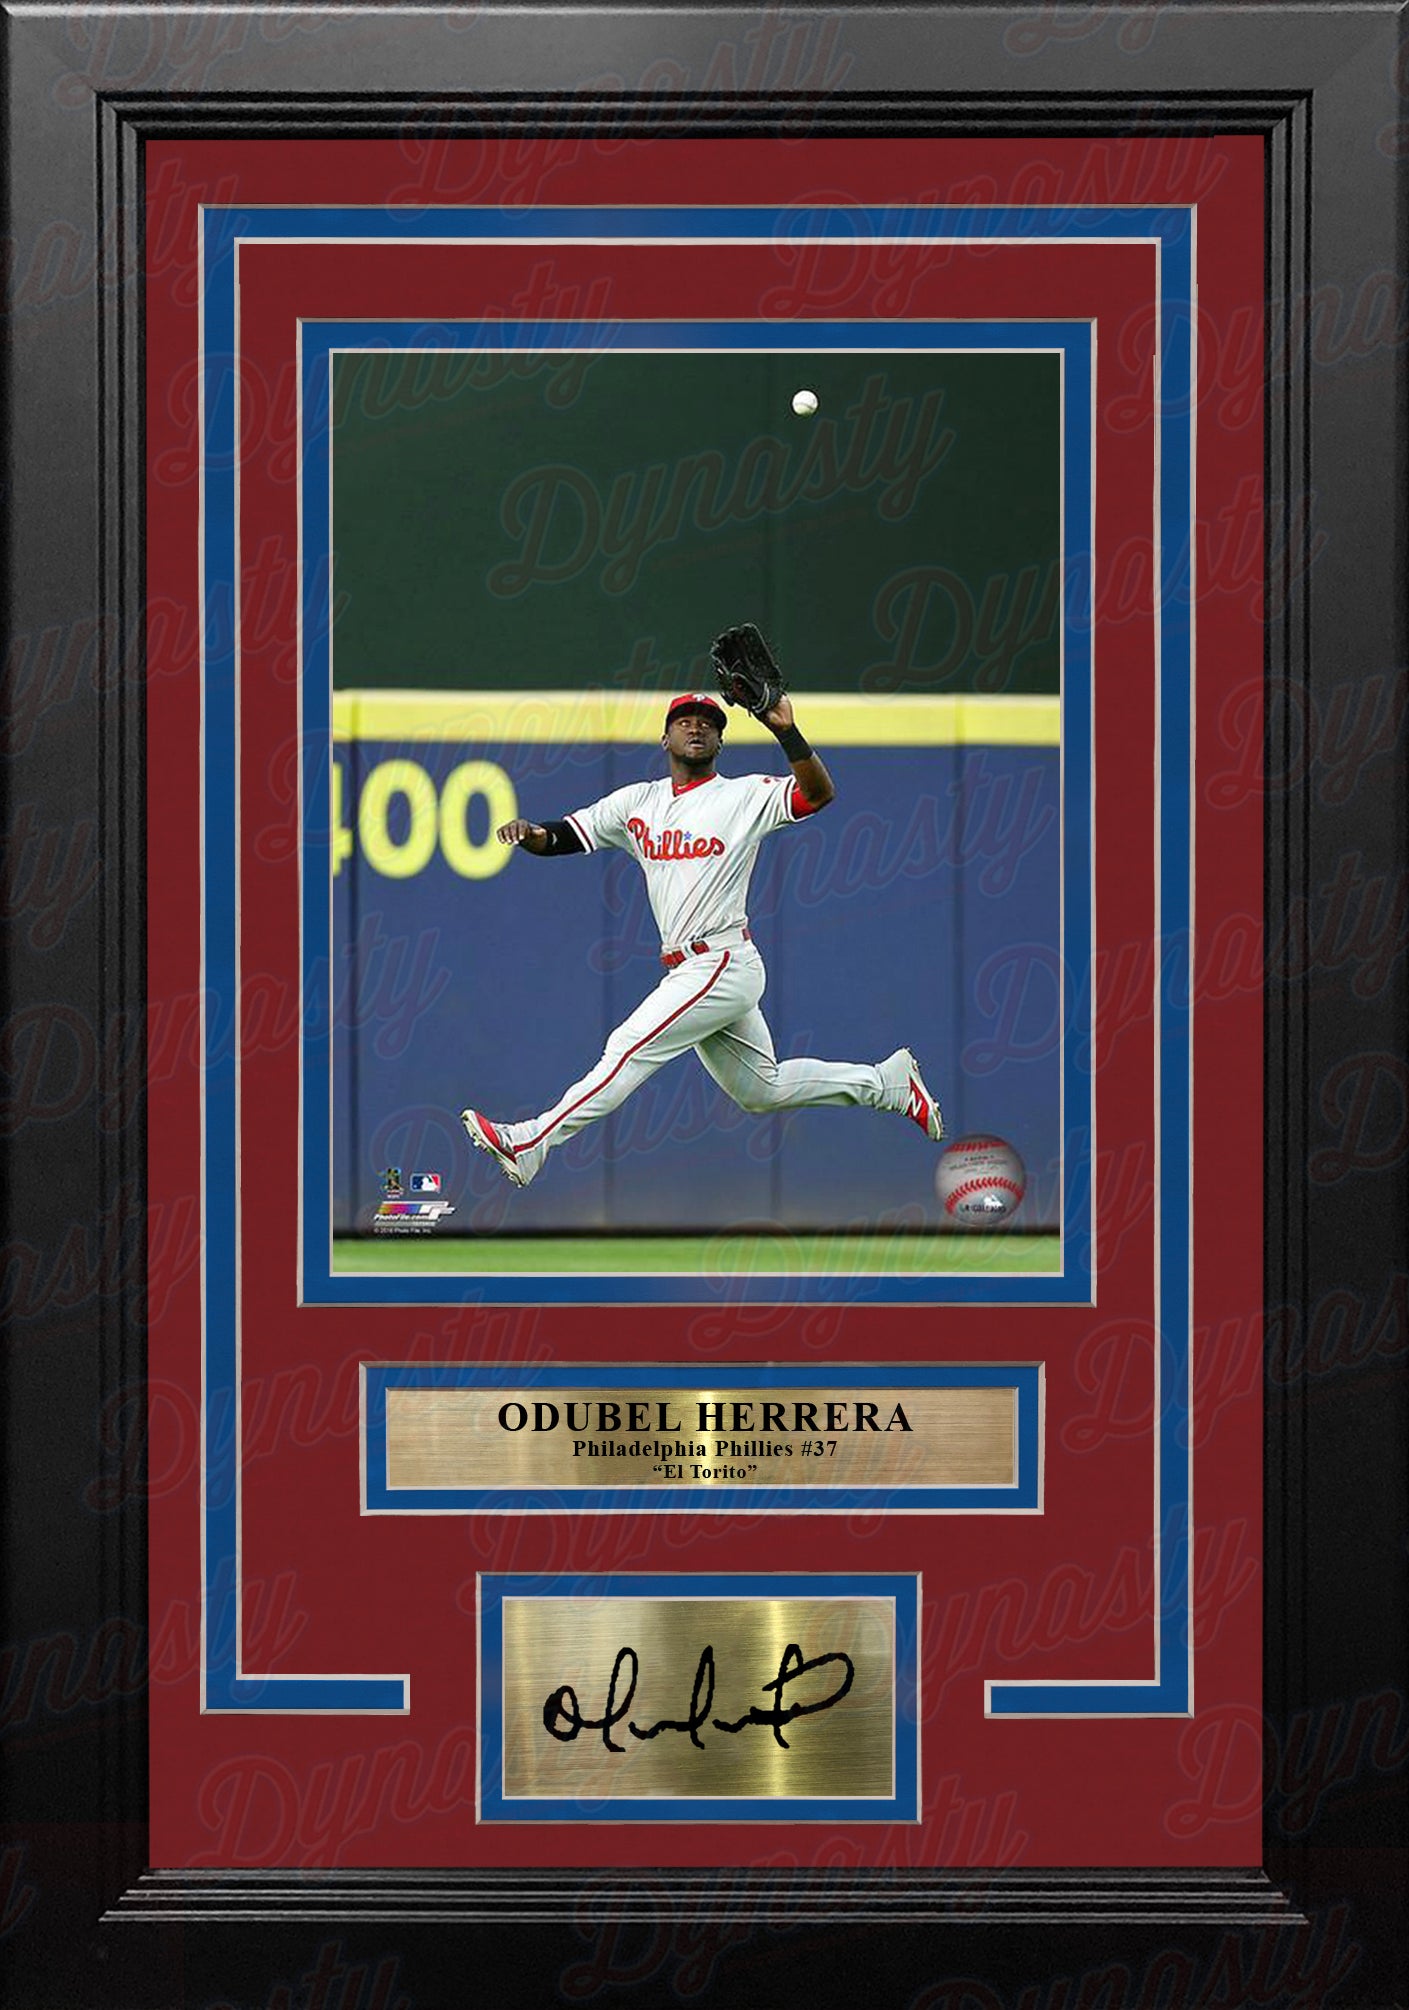 Odubel Herrera Philadelphia Phillies Jump Catch MLB Baseball Framed Photo with Engraved Autograph - Dynasty Sports & Framing 